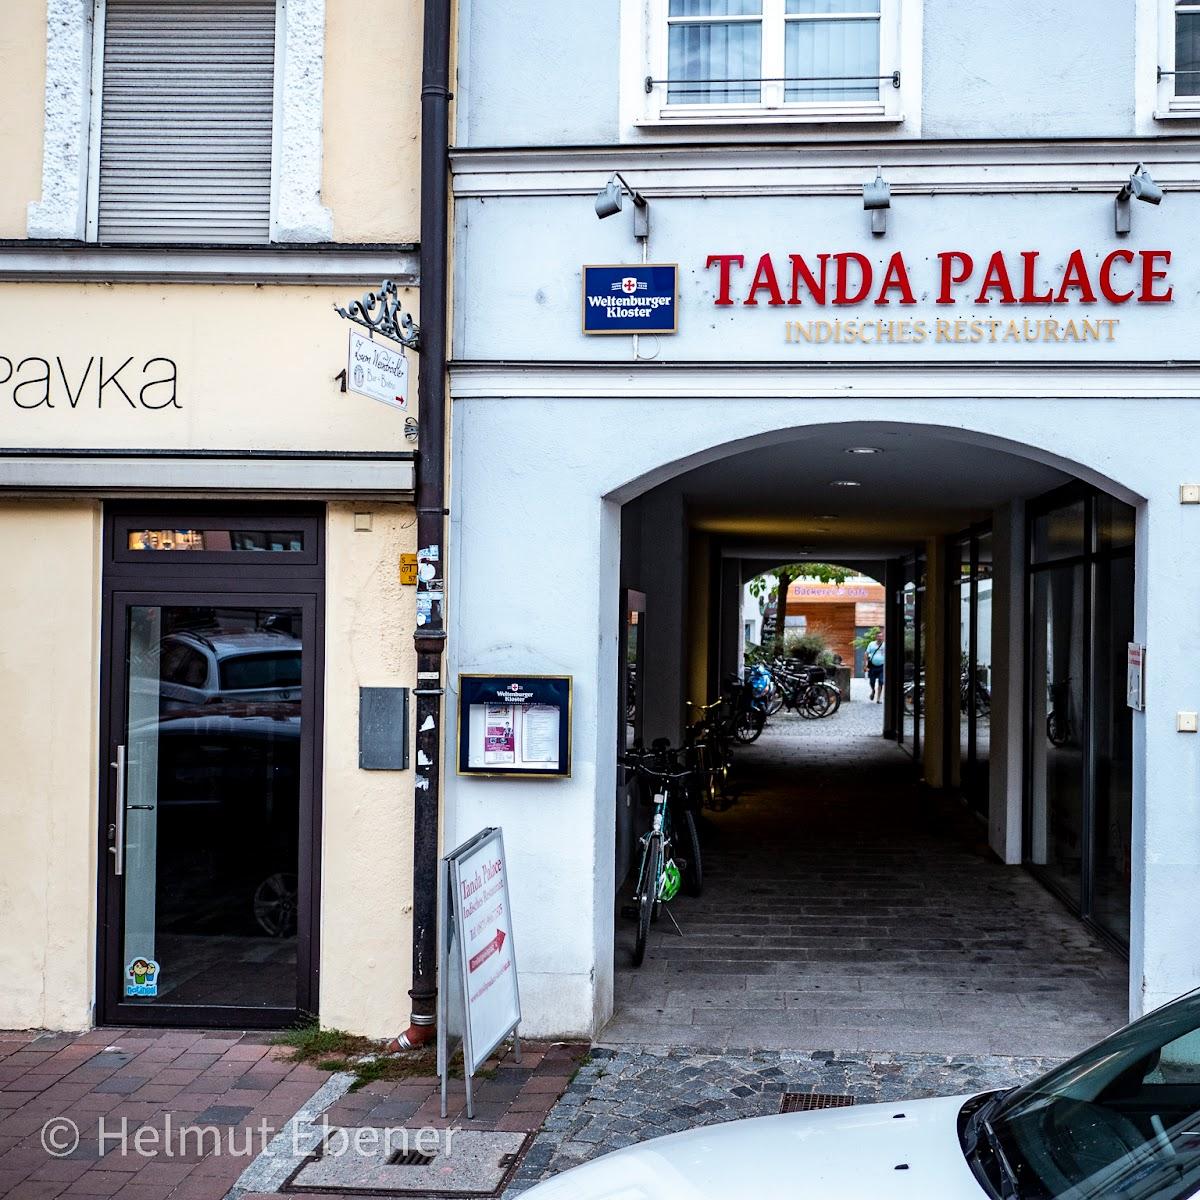 Restaurant "Tanda Palace" in Landshut